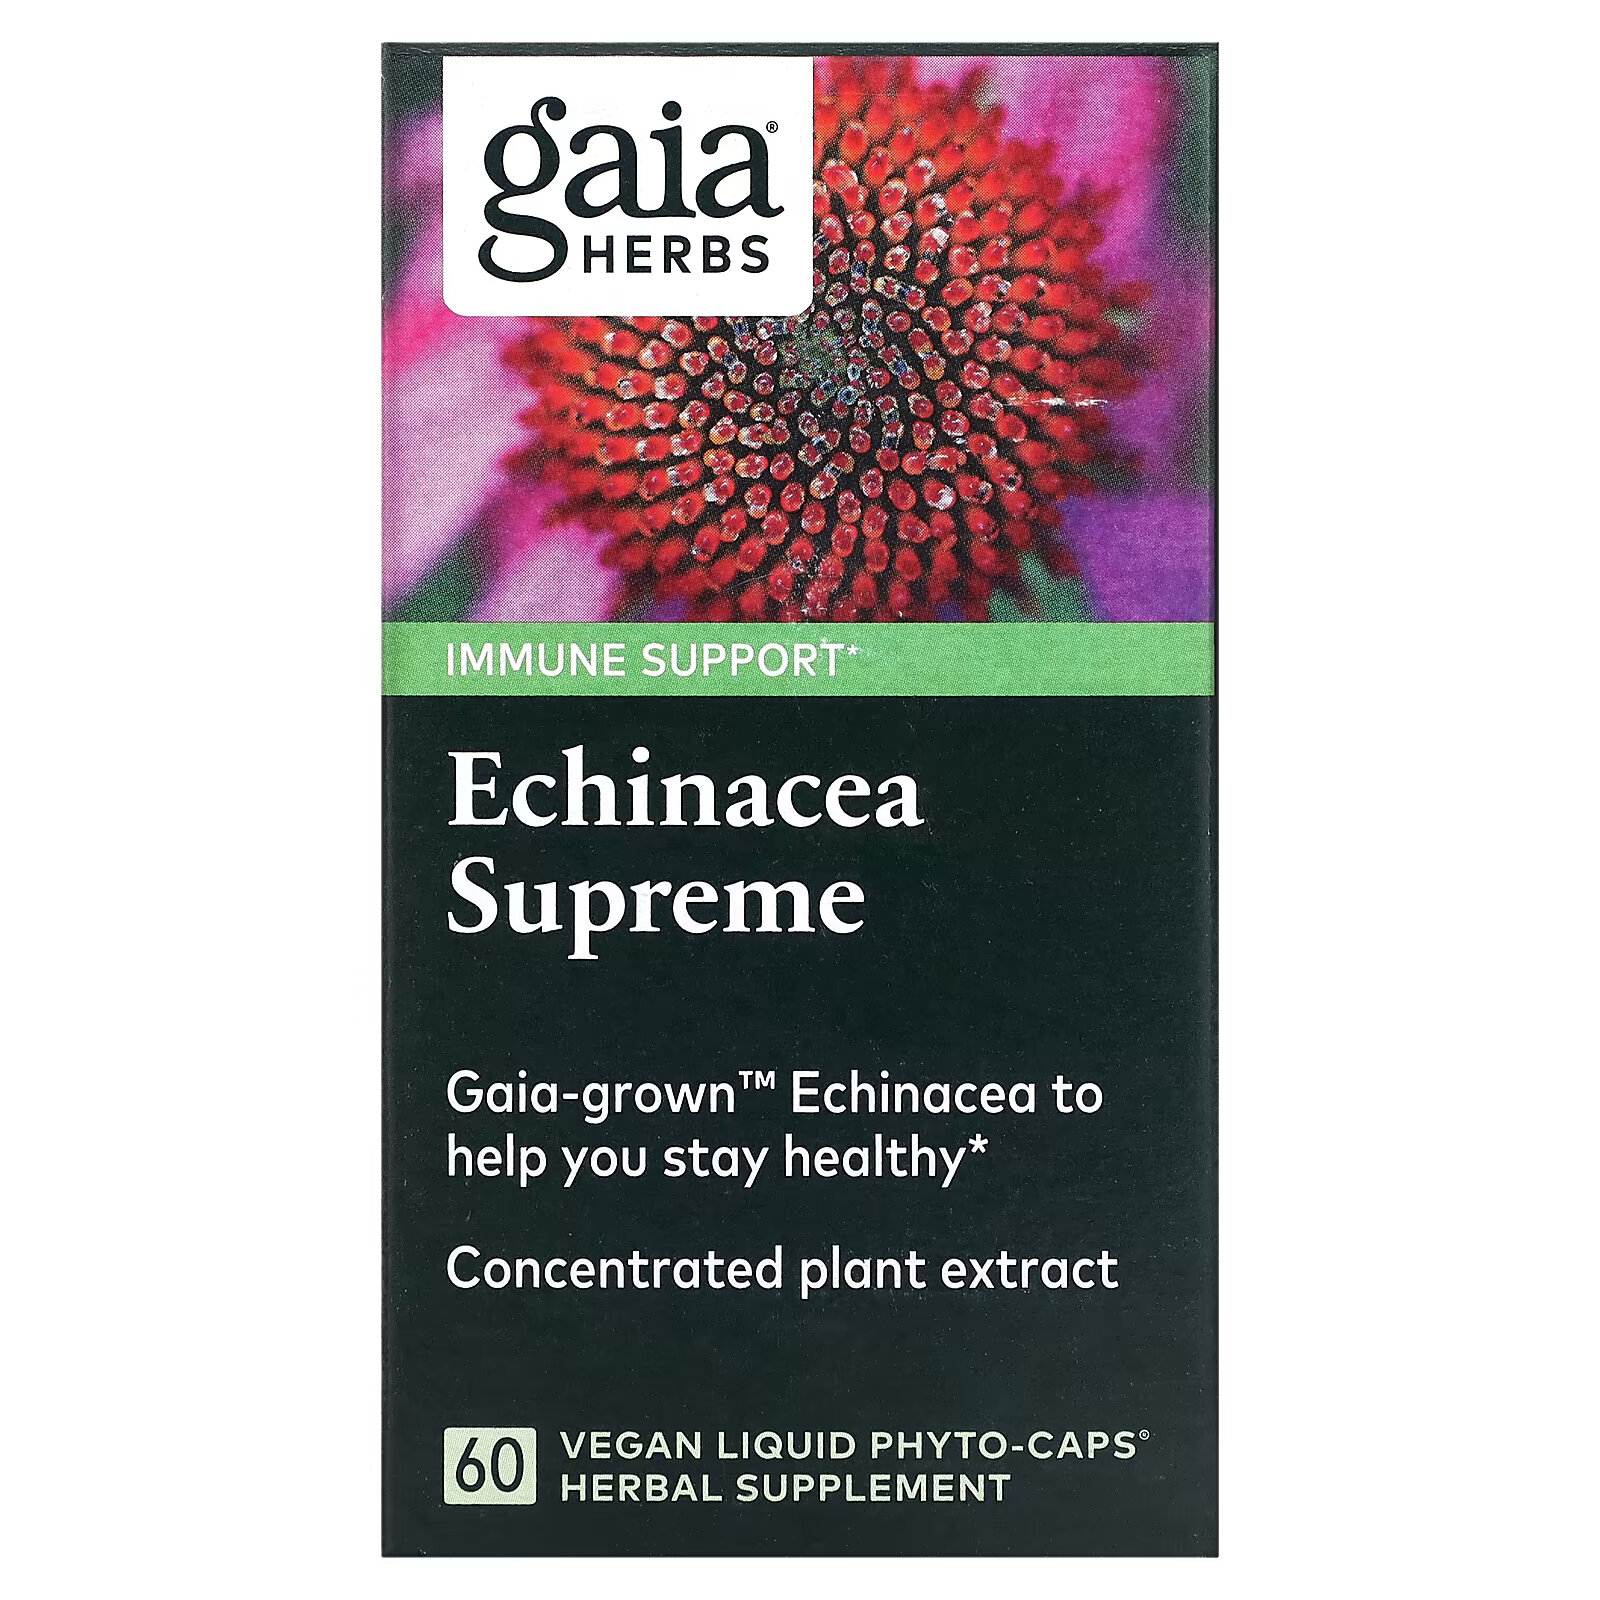 Gaia Herbs, Echinacea Supreme, 60 вегетарианских фито-капсул с жидкостью gaia herbs зверобой 60 веганских фито капсул с жидкостью